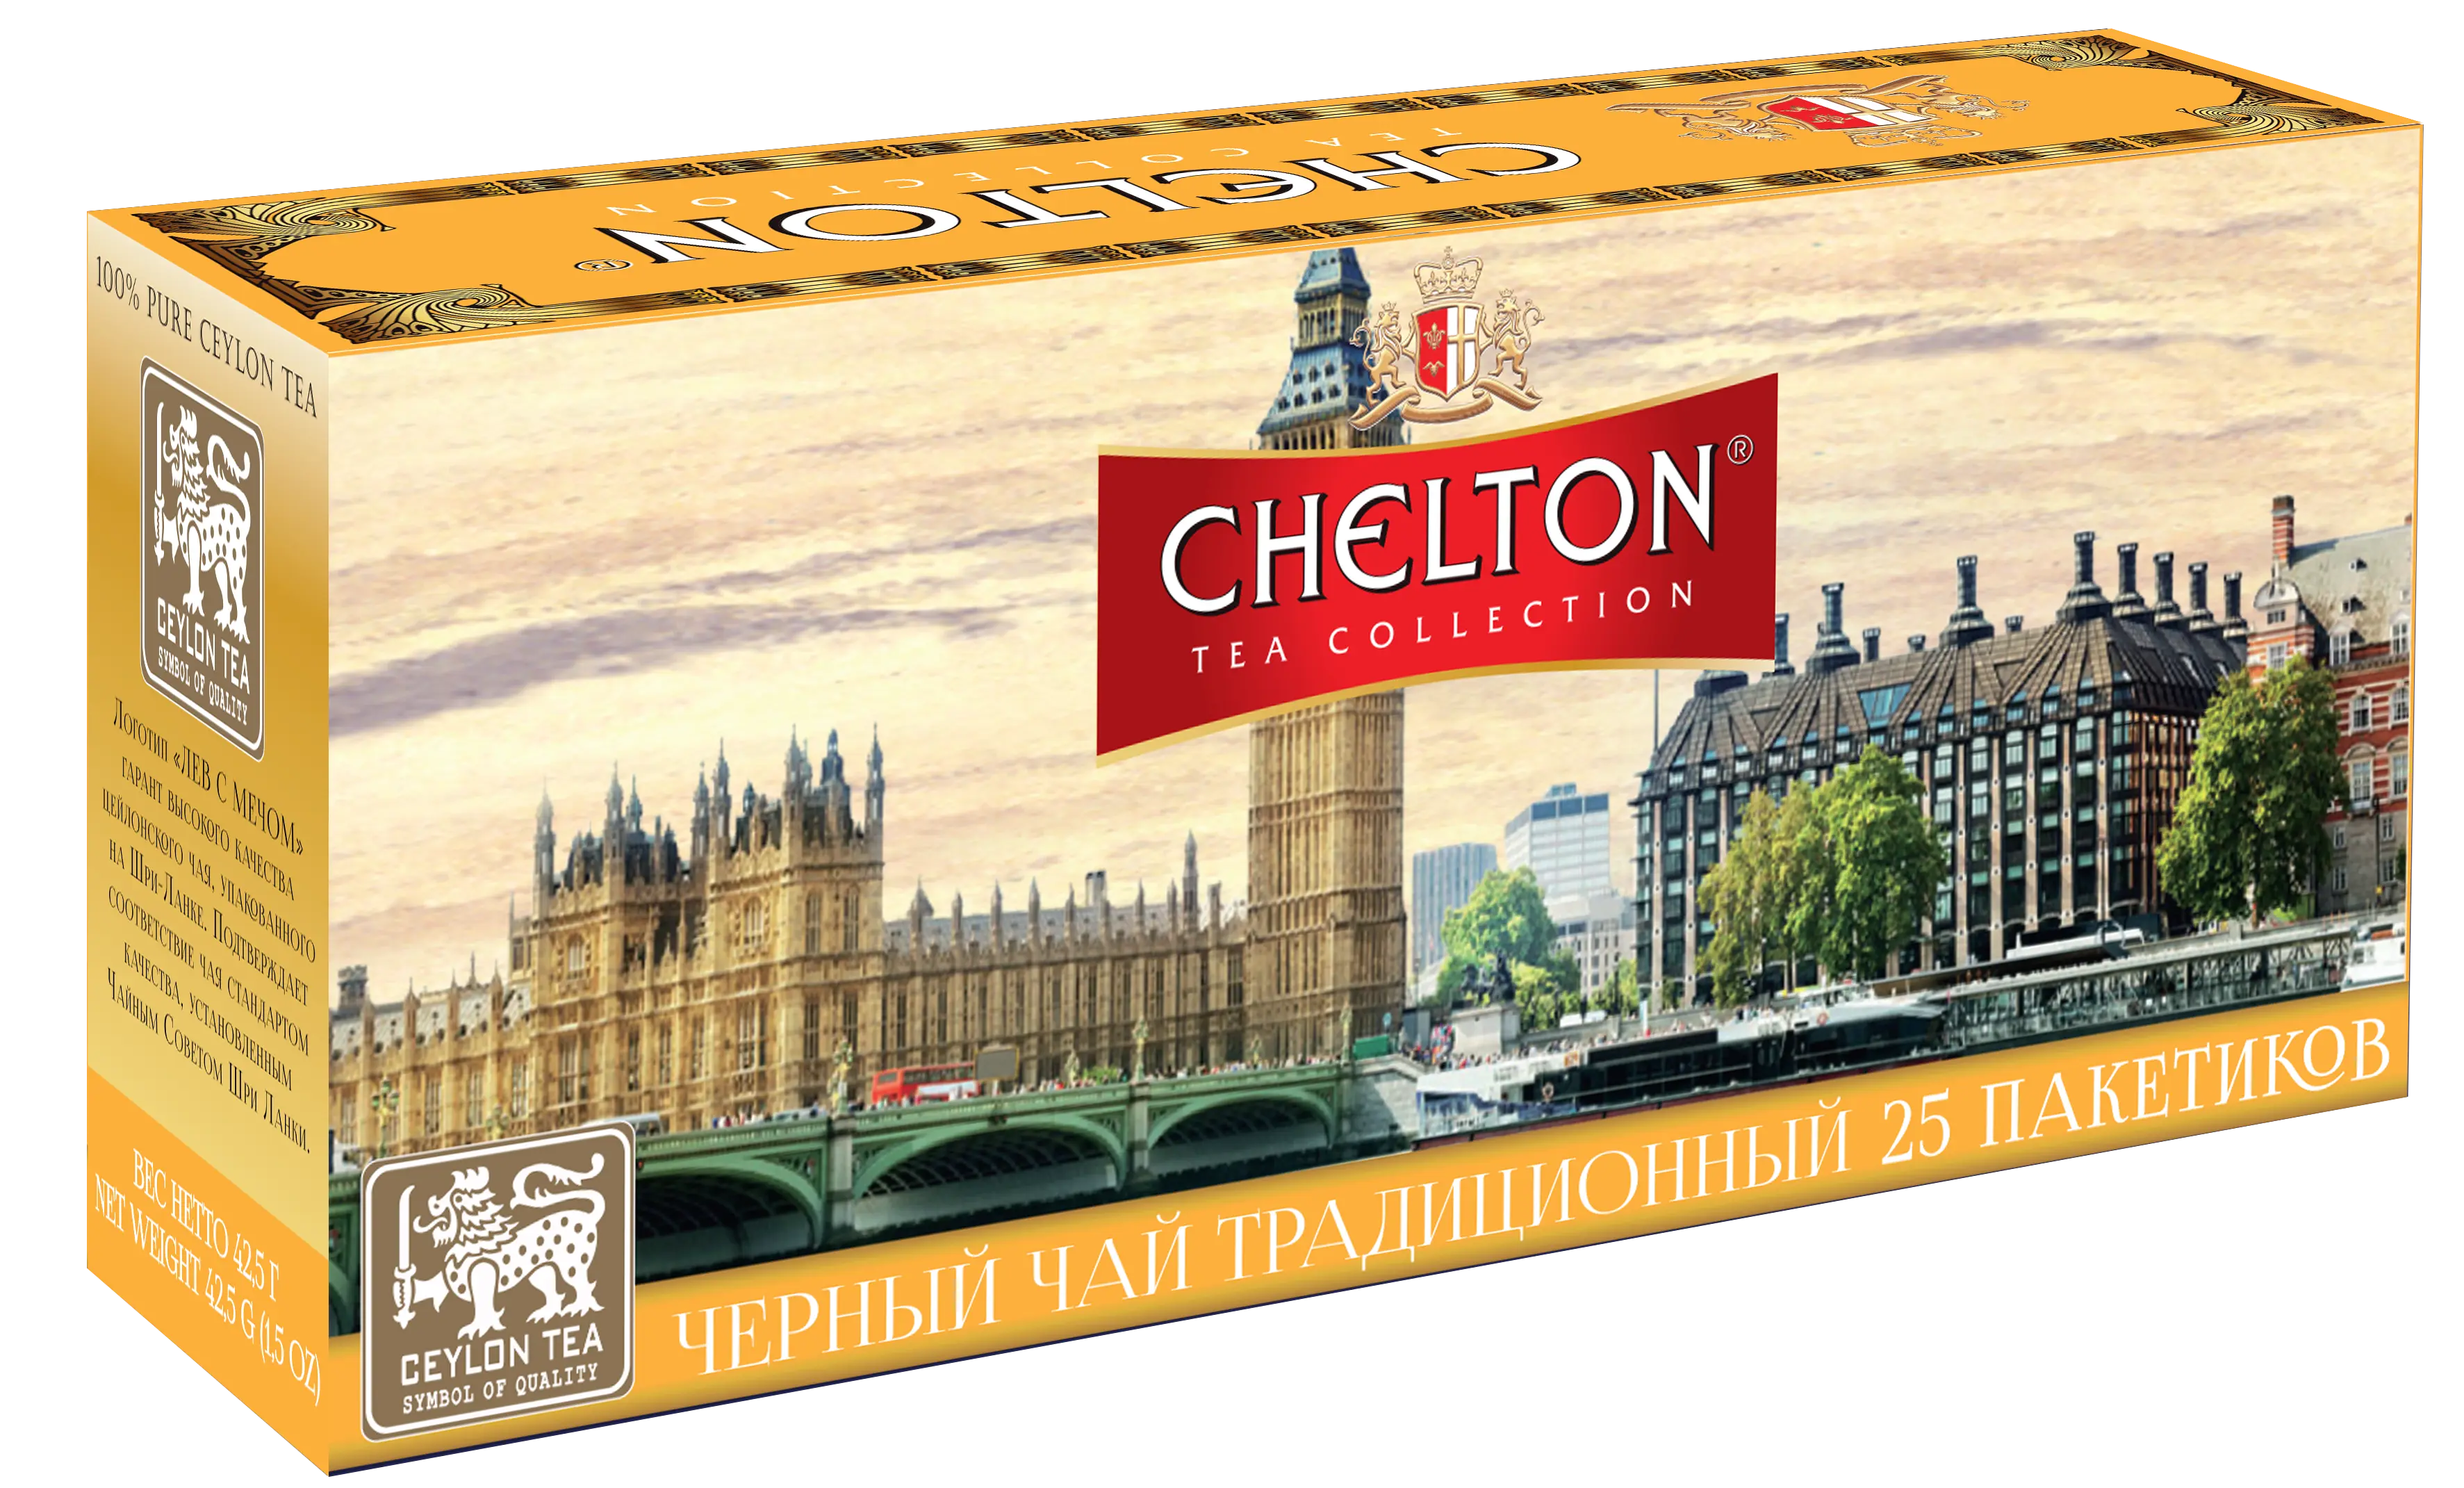 Chelton ex.25 Traditional